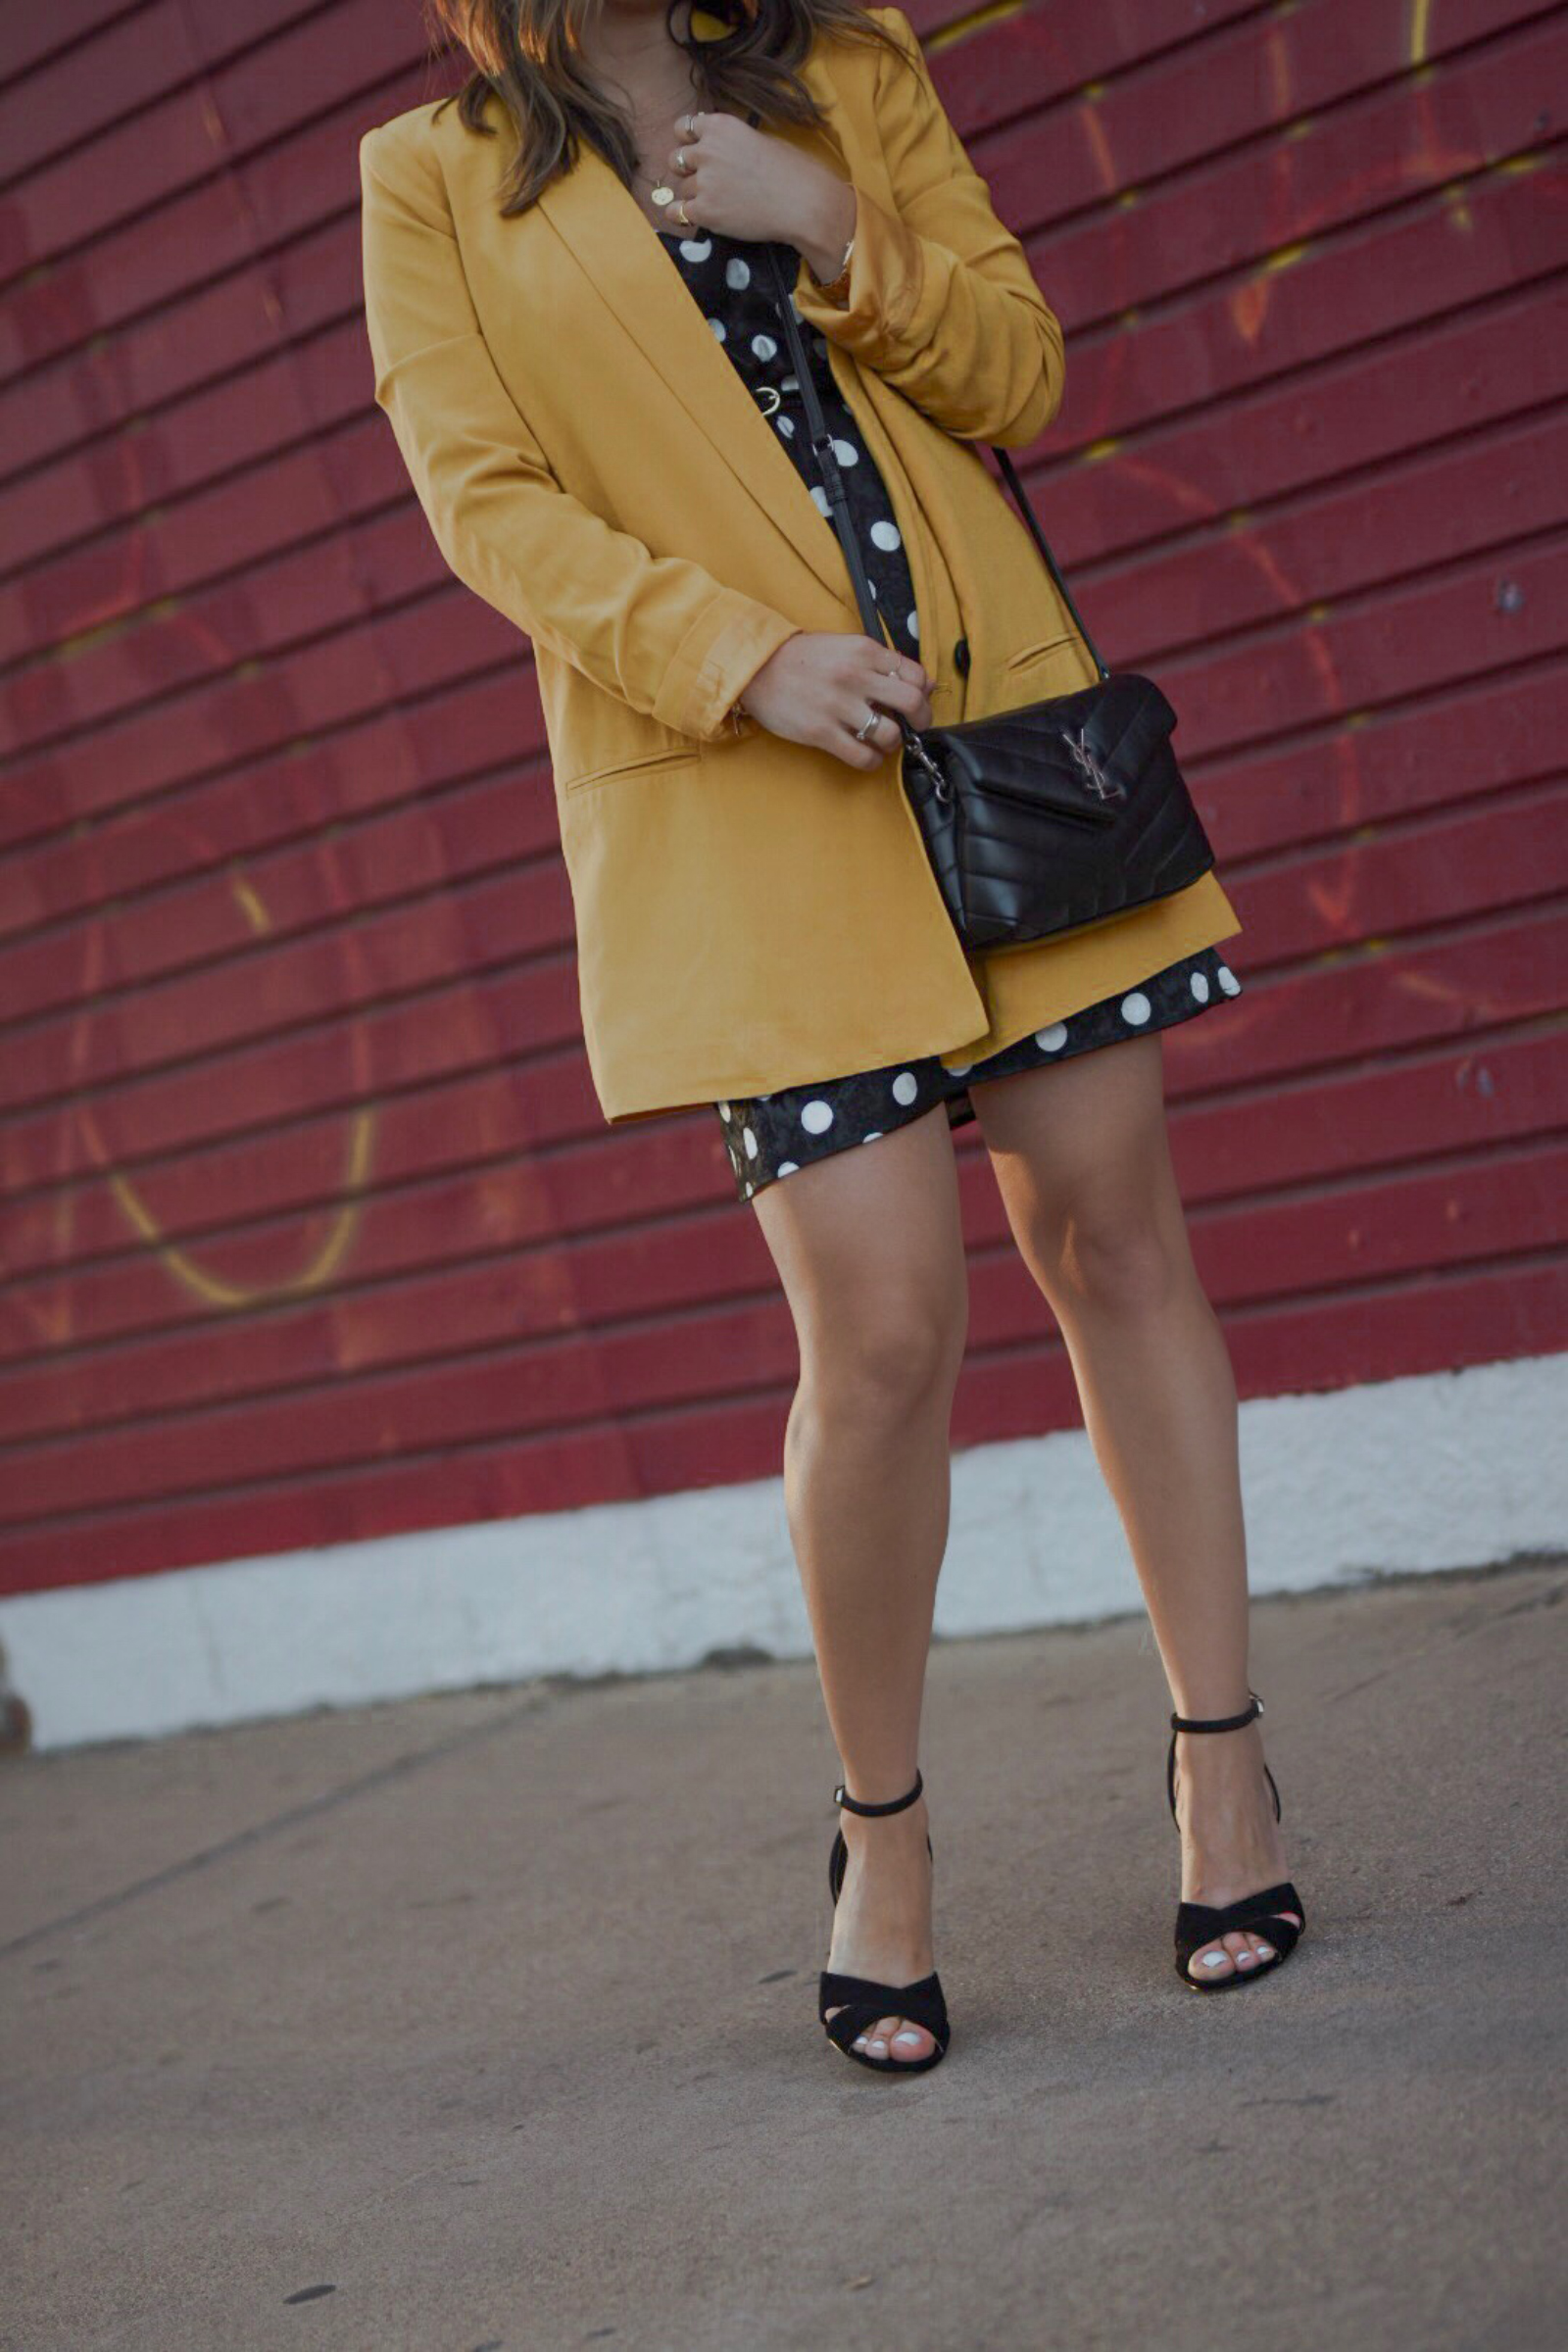 Carolina Hellal of Chic Talk wearing a Topshop polka dot dress, Mural yellow blazer, Sam Edelman sandals and YSL crossbody bag - Spring polka dot dress by popular Denver fashion blogger Chic Talk